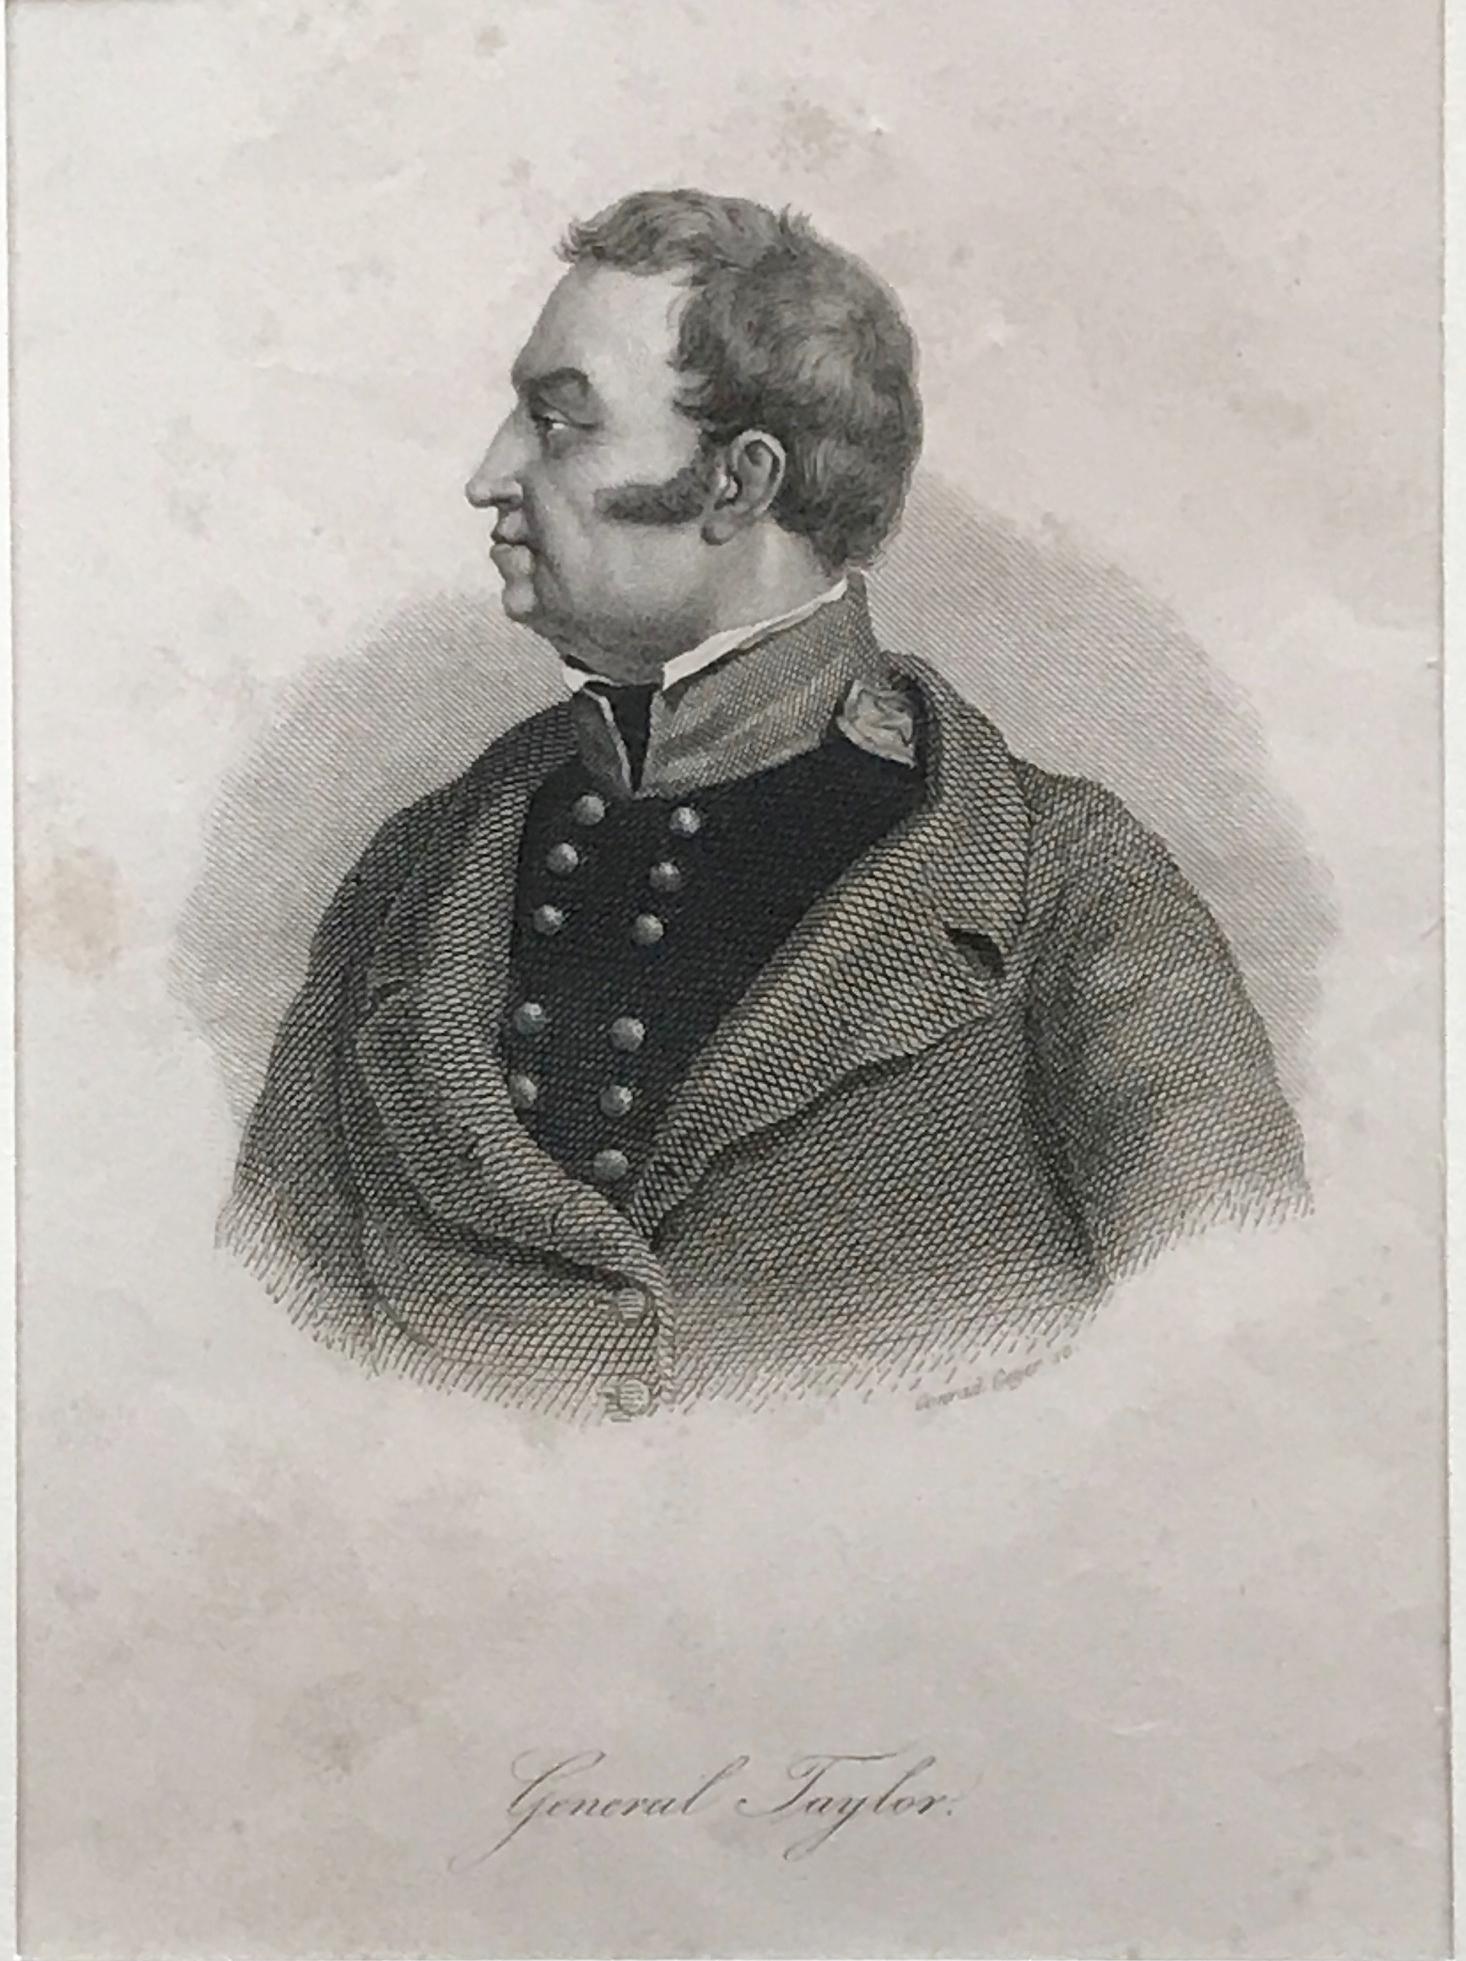 Other General Taylor, Conrad Geyer sc, circa 1860 For Sale